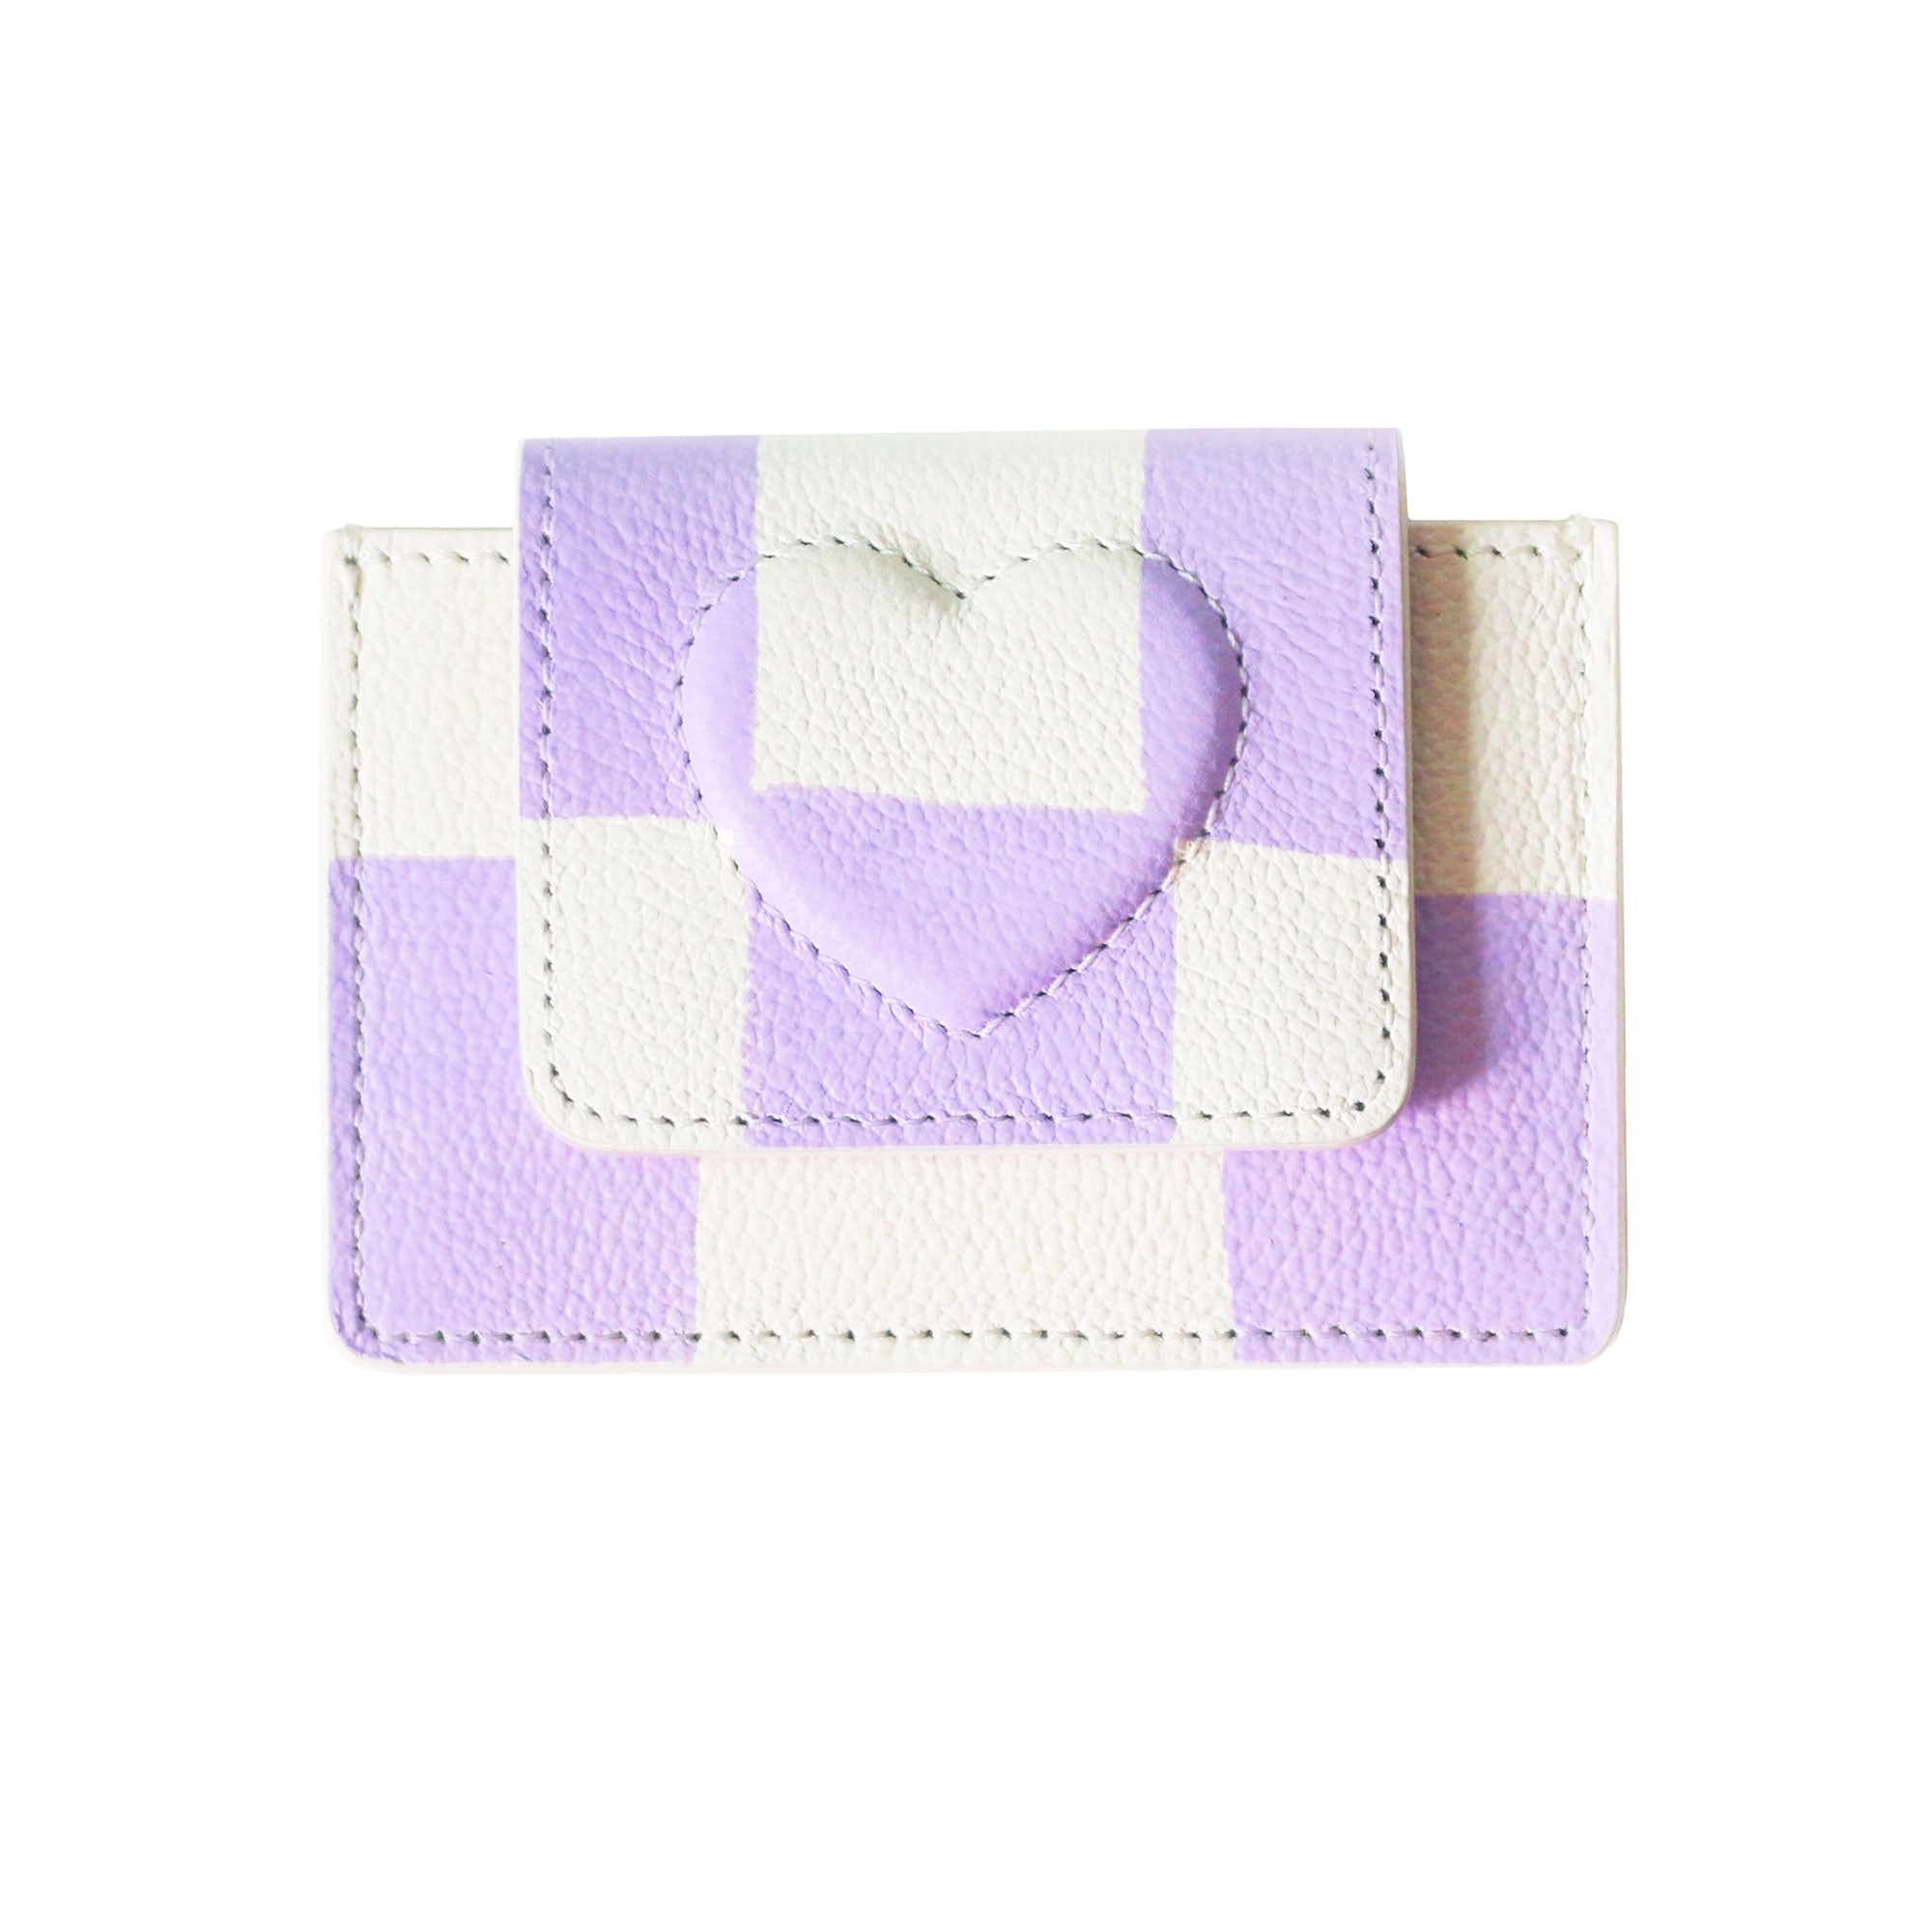 shape of' wallet - purple check